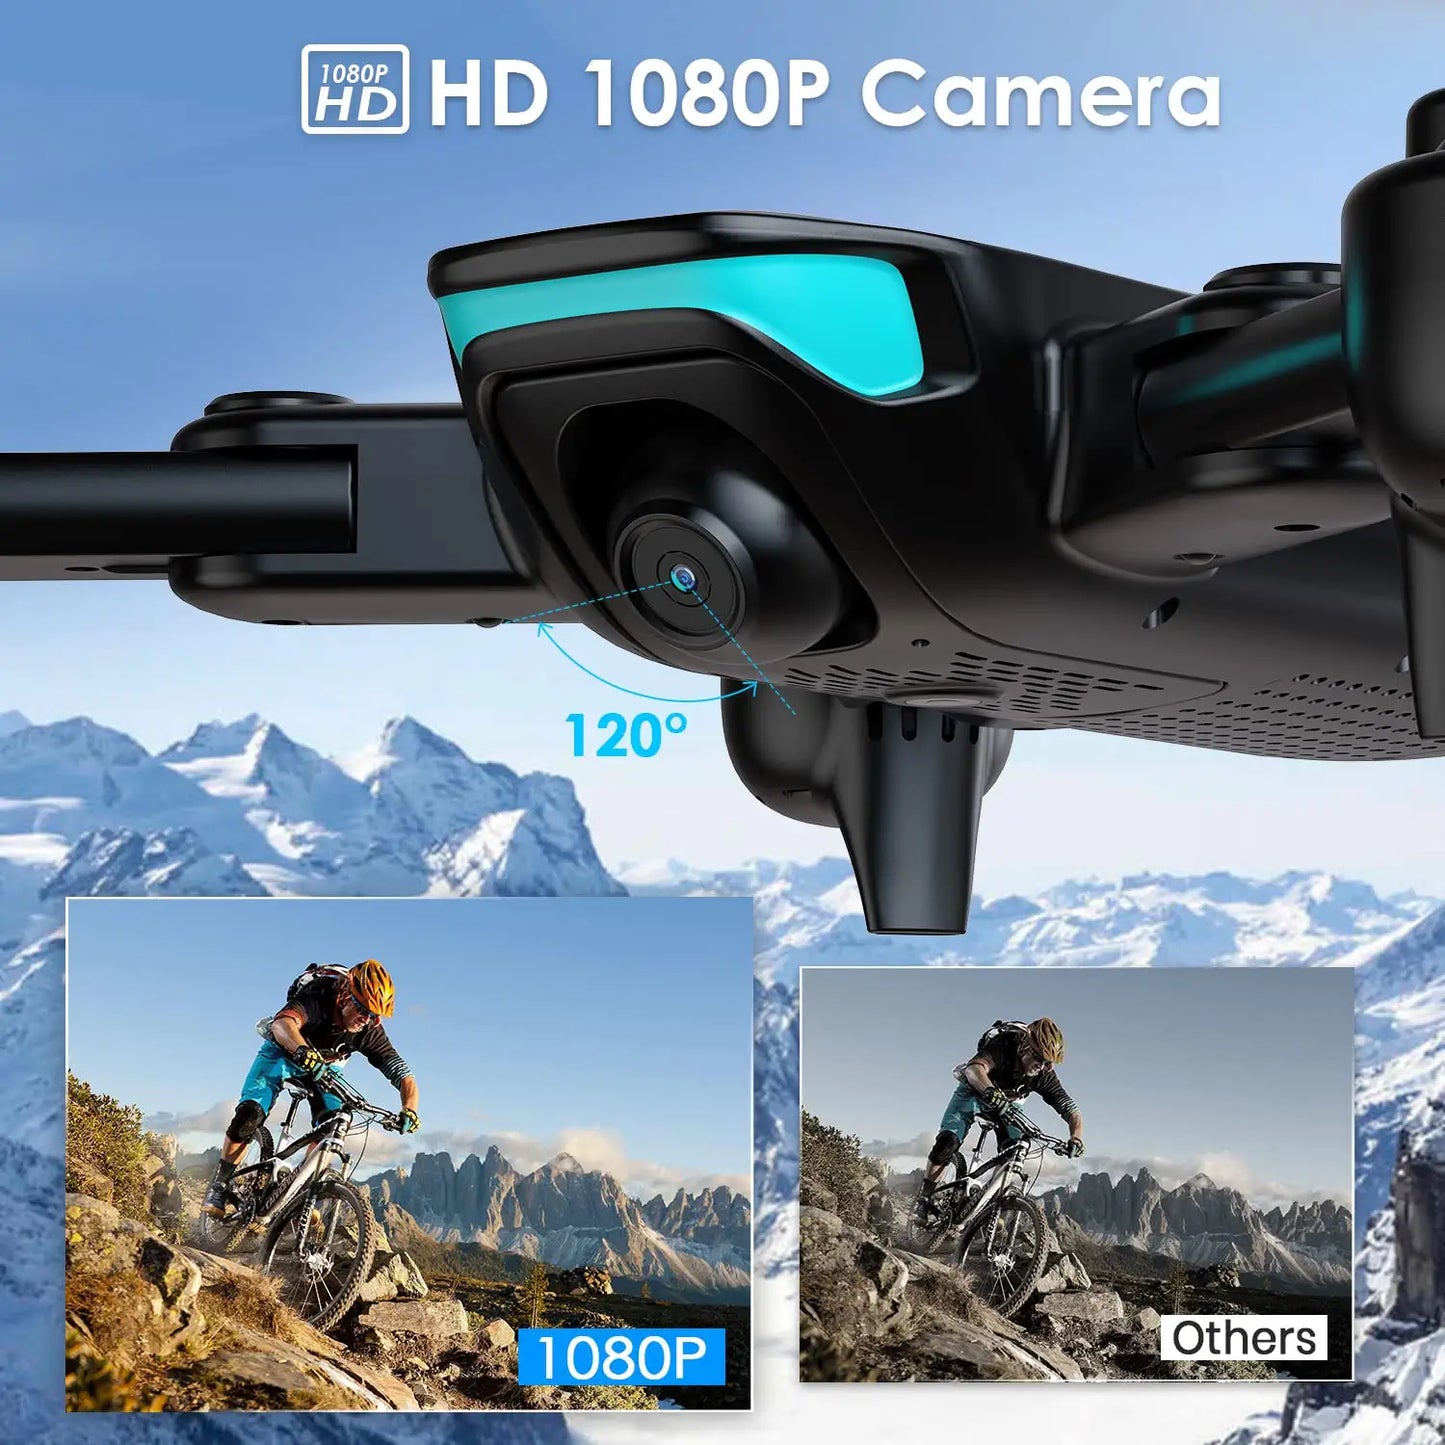 Zuhafa JY02 Drone- 1080P HD Camera 40 Mins Flight Time,Altitude Hold Mode, RTF One Key Take Off/Landing,2 Batteries - RCDrone